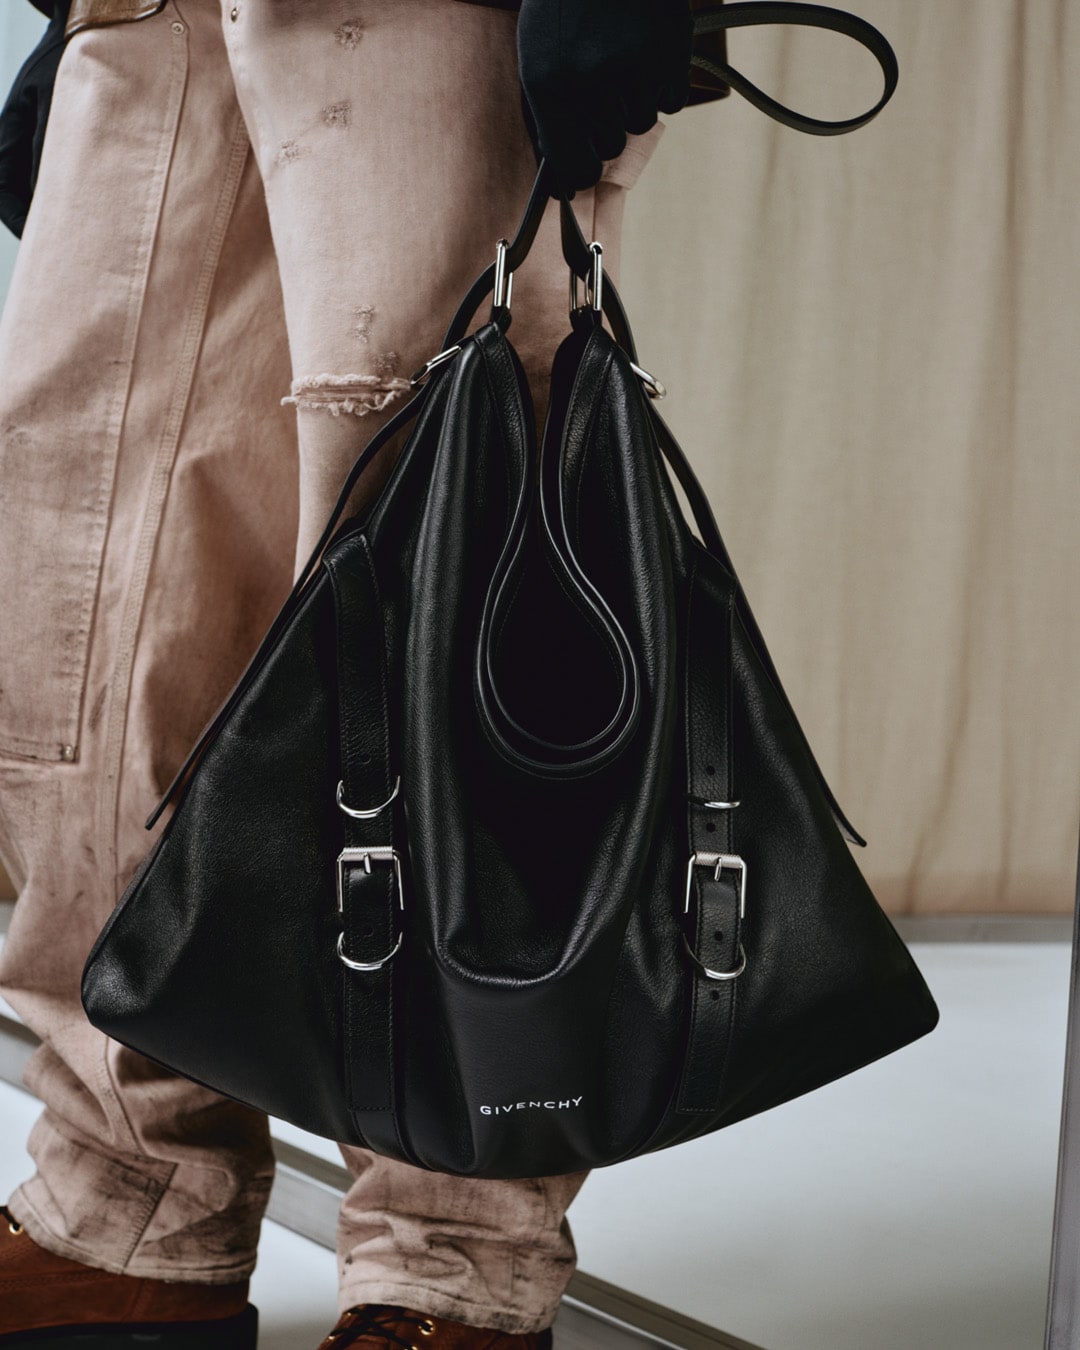 Givenchy logo on luxury leather handbag – Stock Editorial Photo ©  NeydtStock #330490826